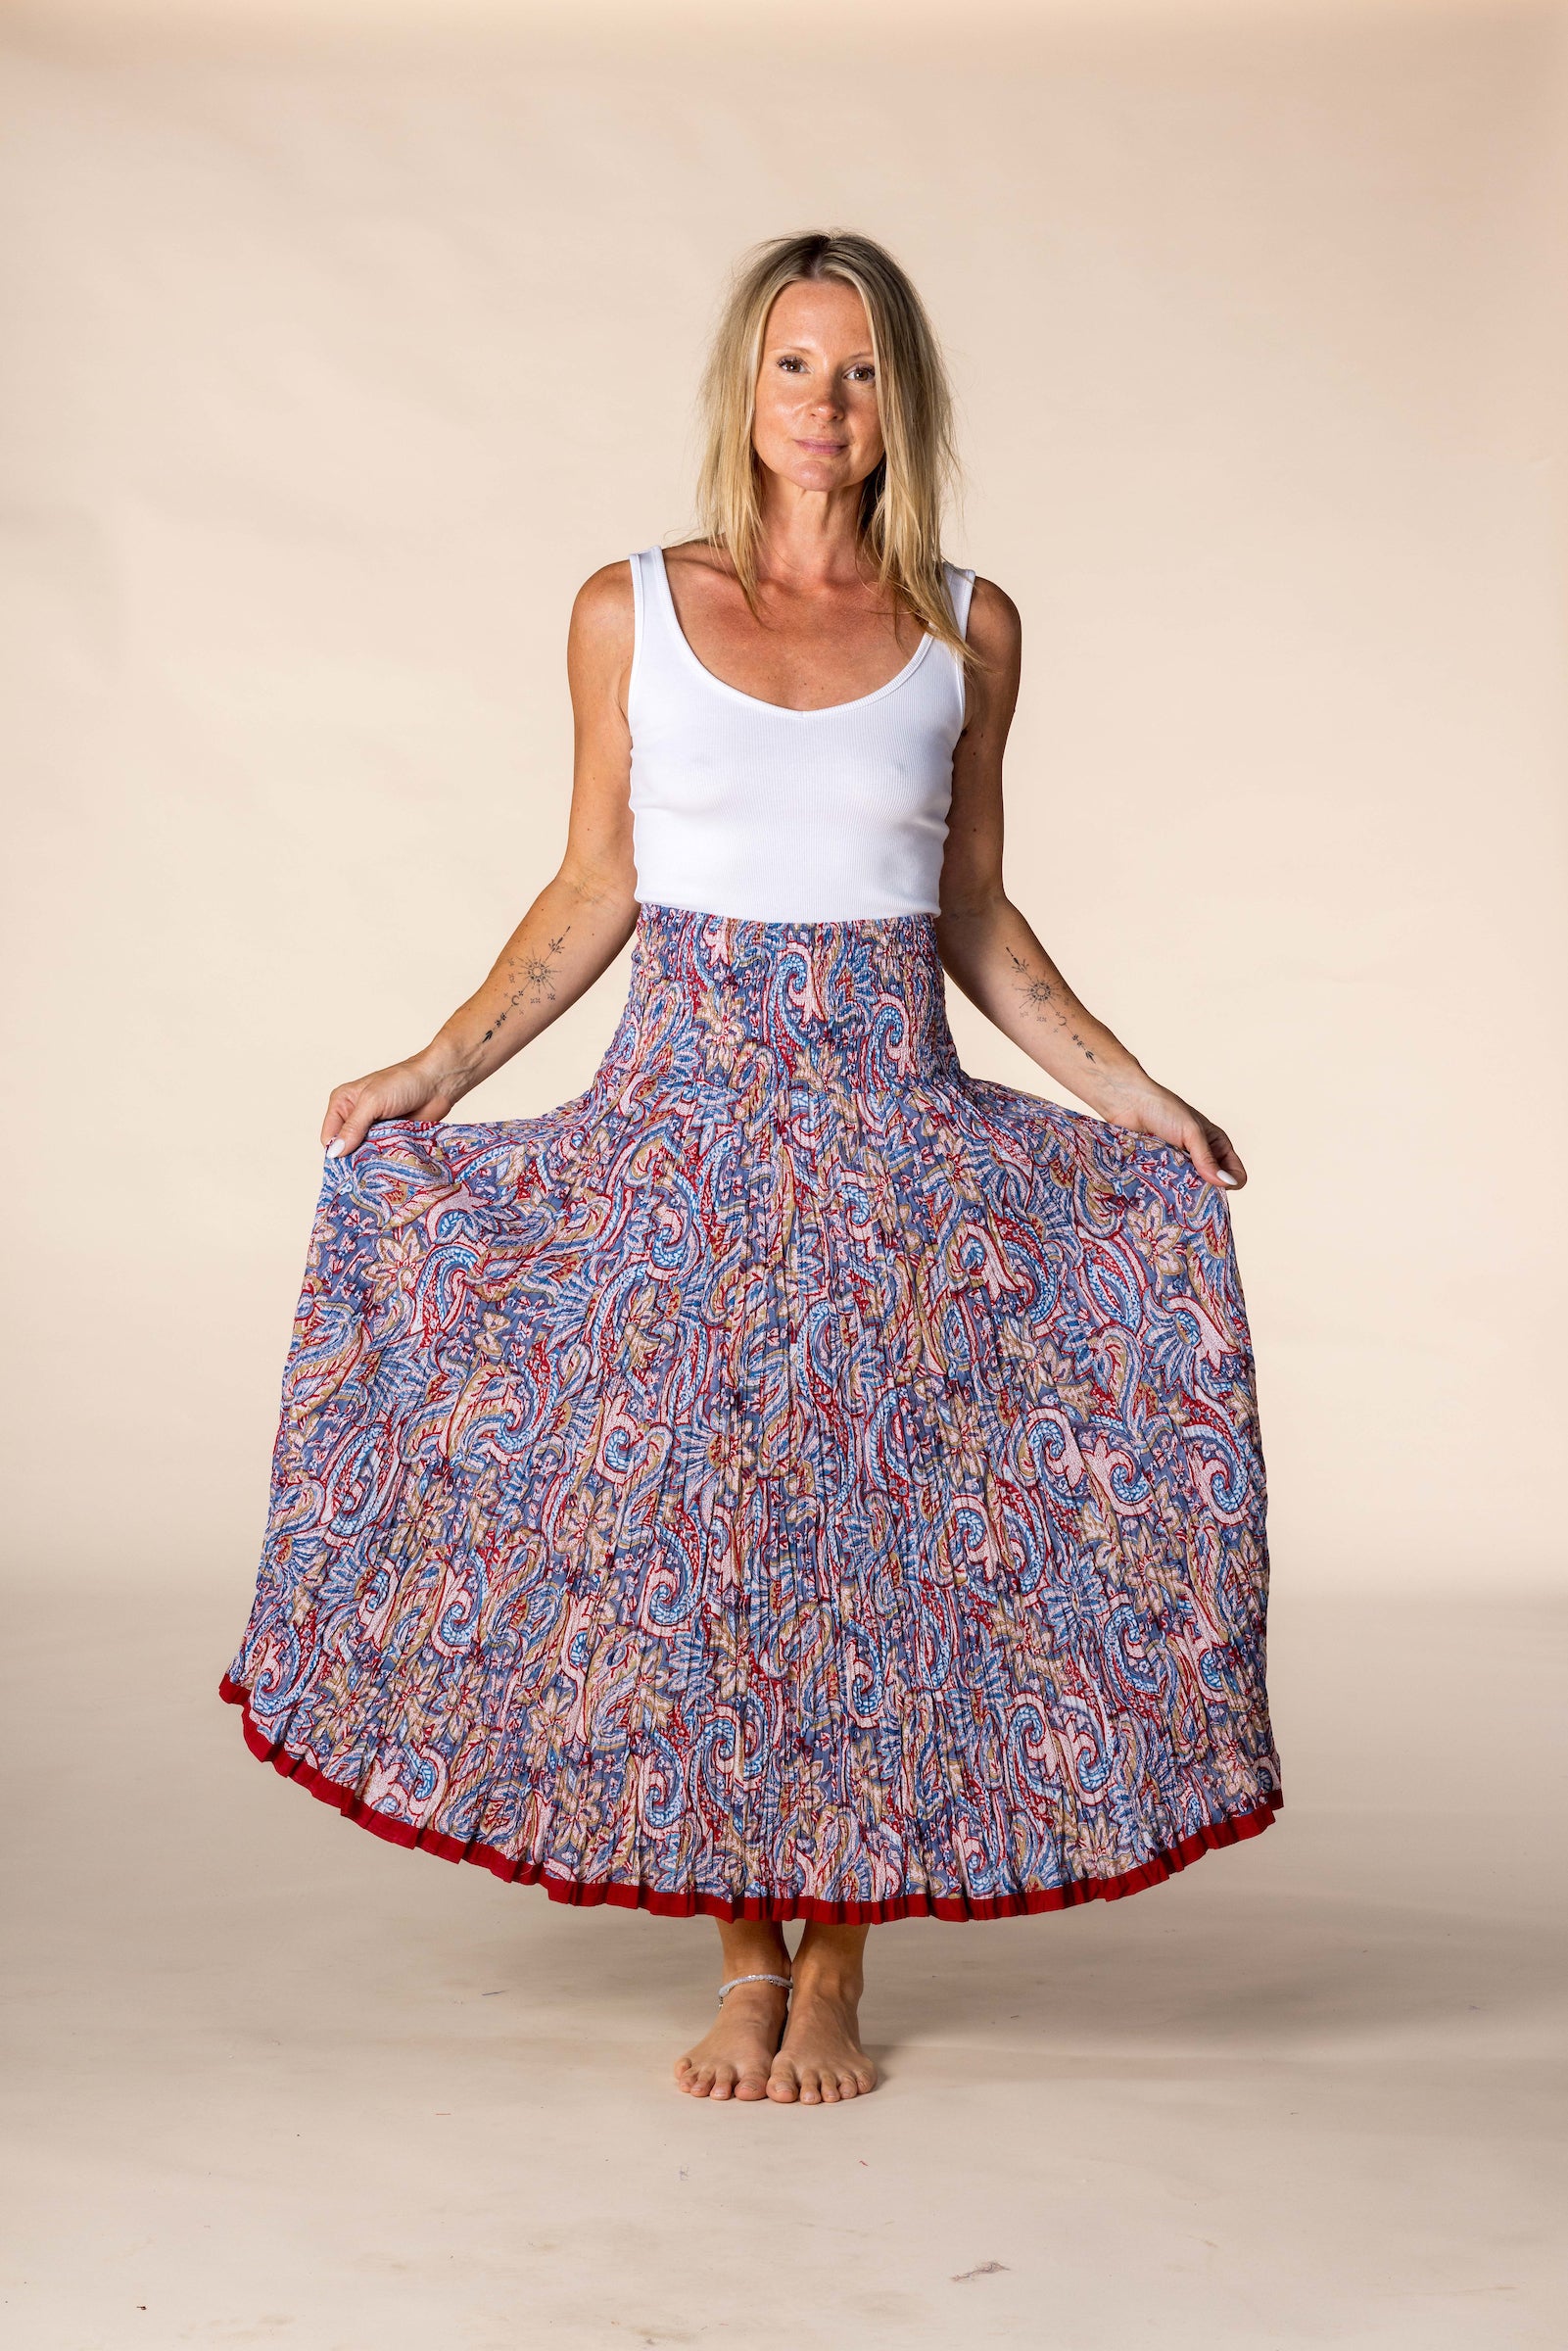 Nila Rubia - 50 Panel Skirt